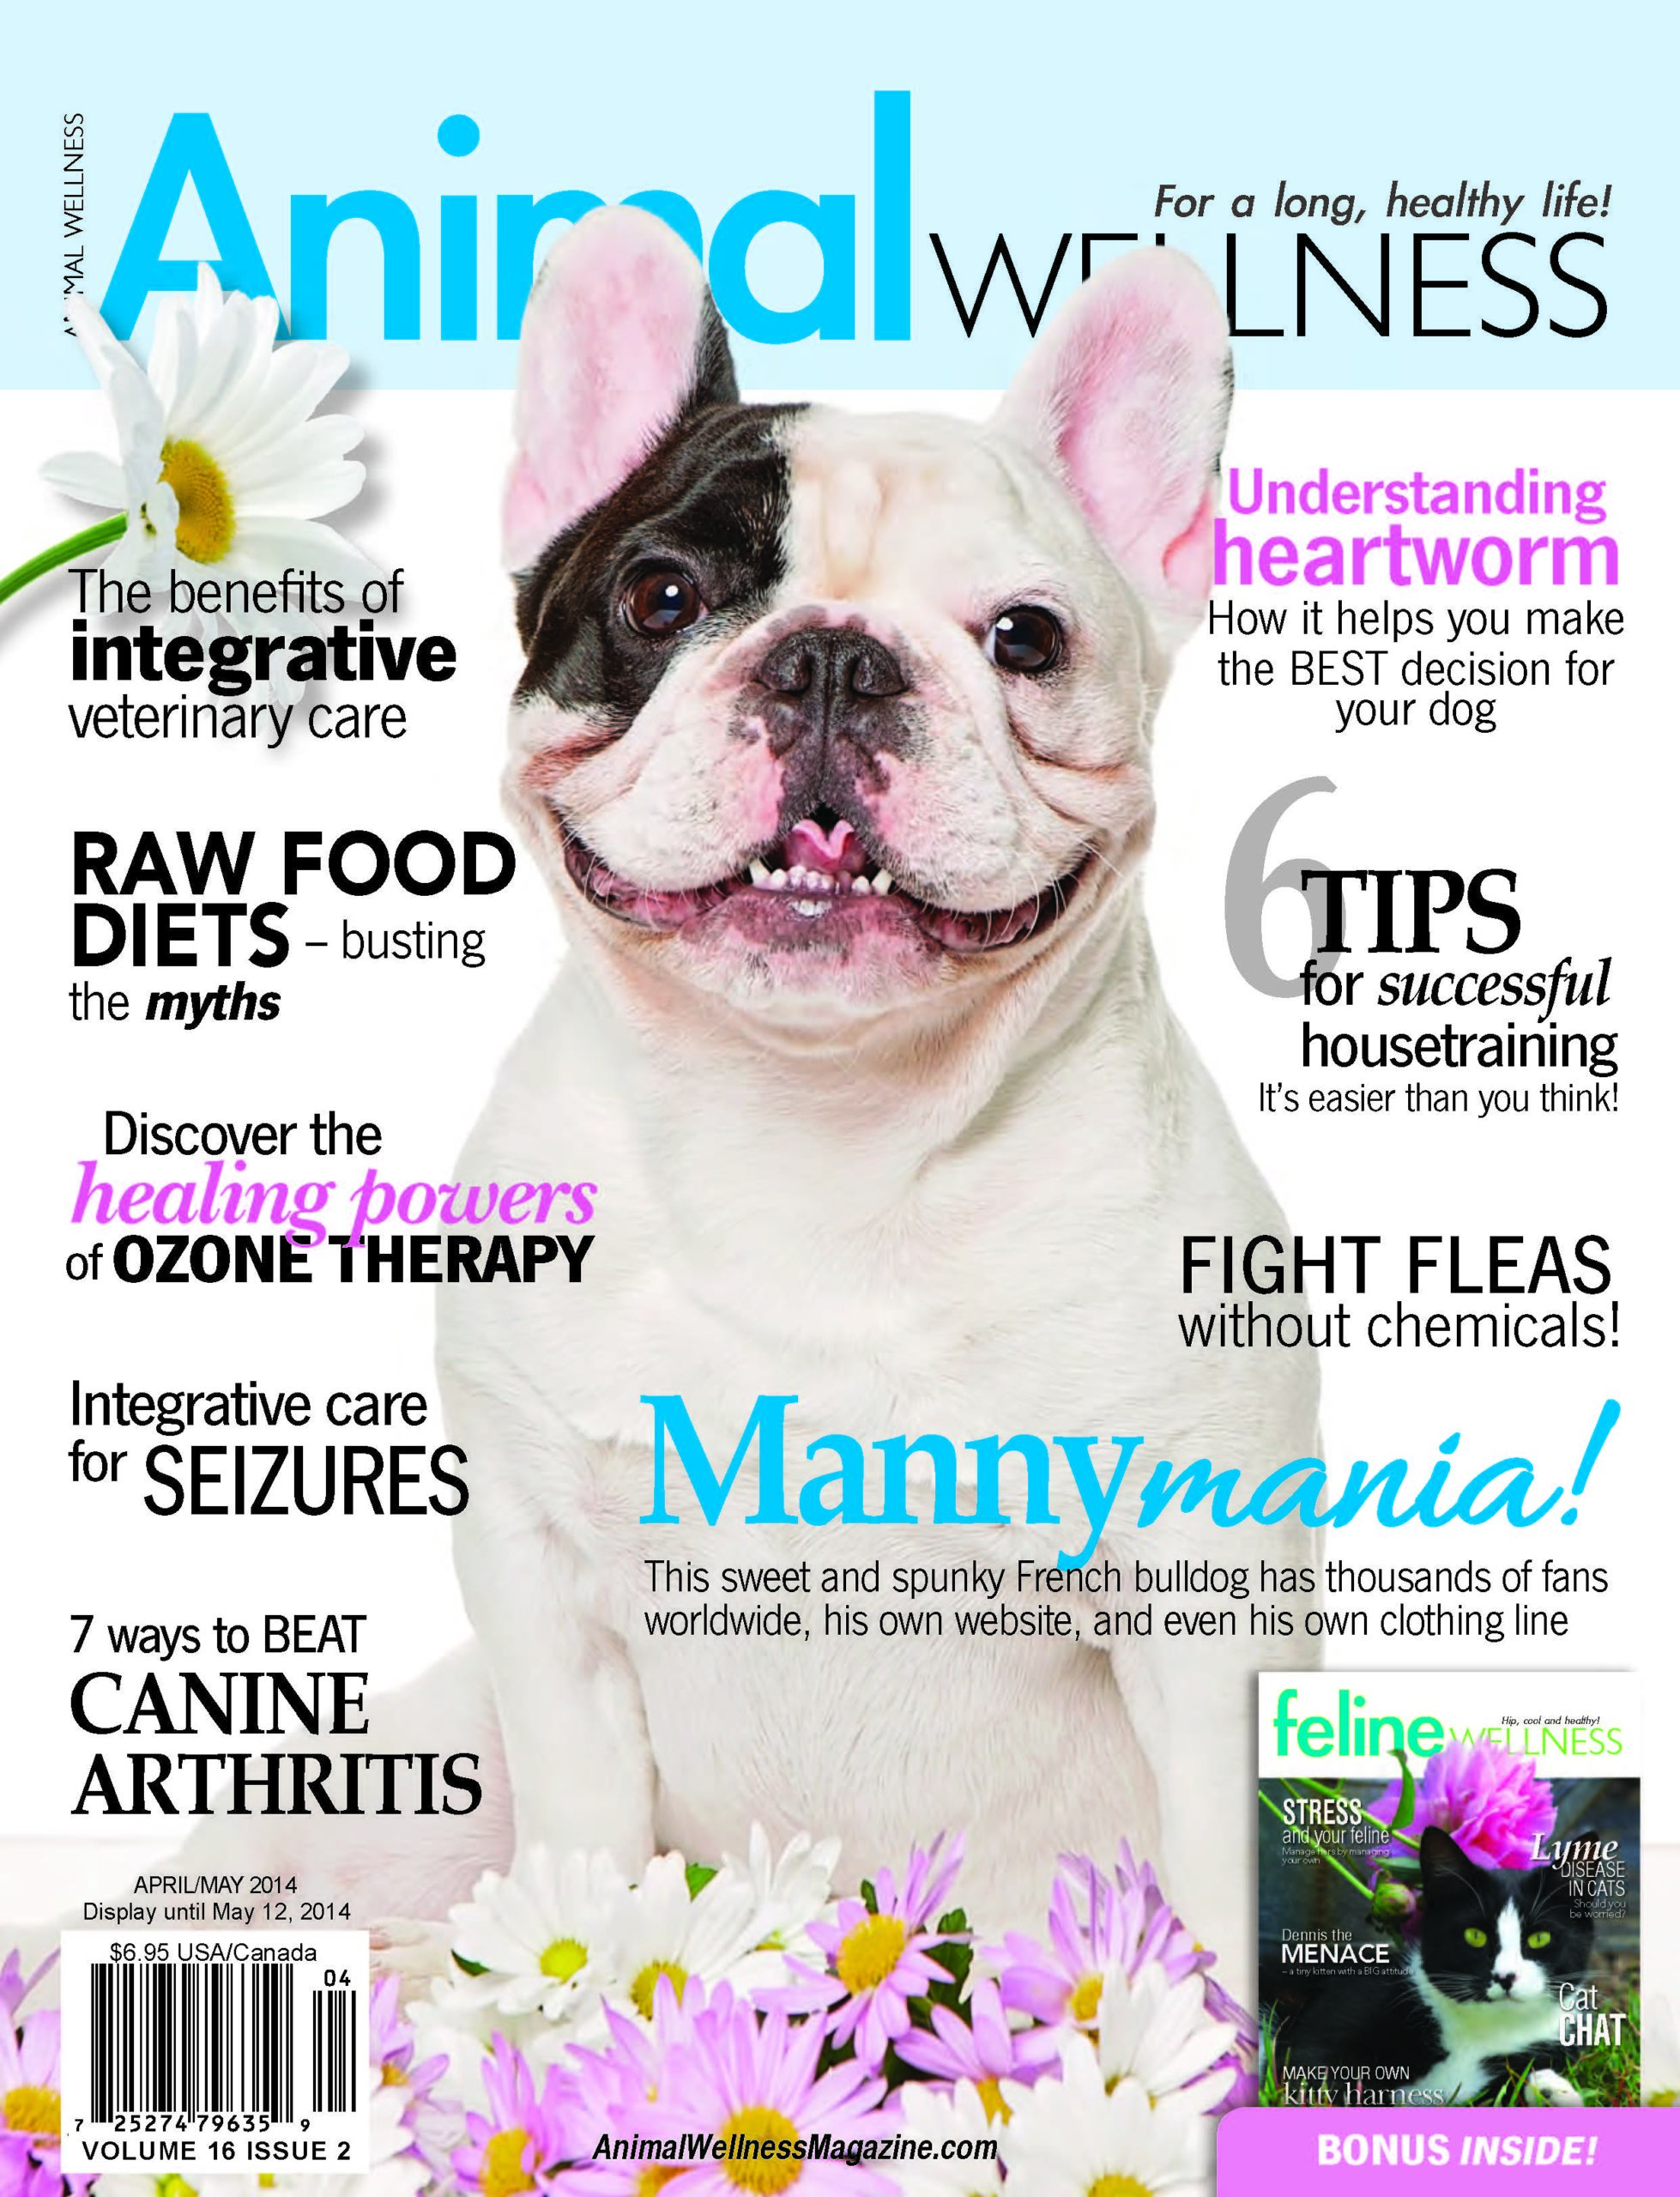 Animal Wellness Magazine: Manny’s Magic and his Evanger's Diet